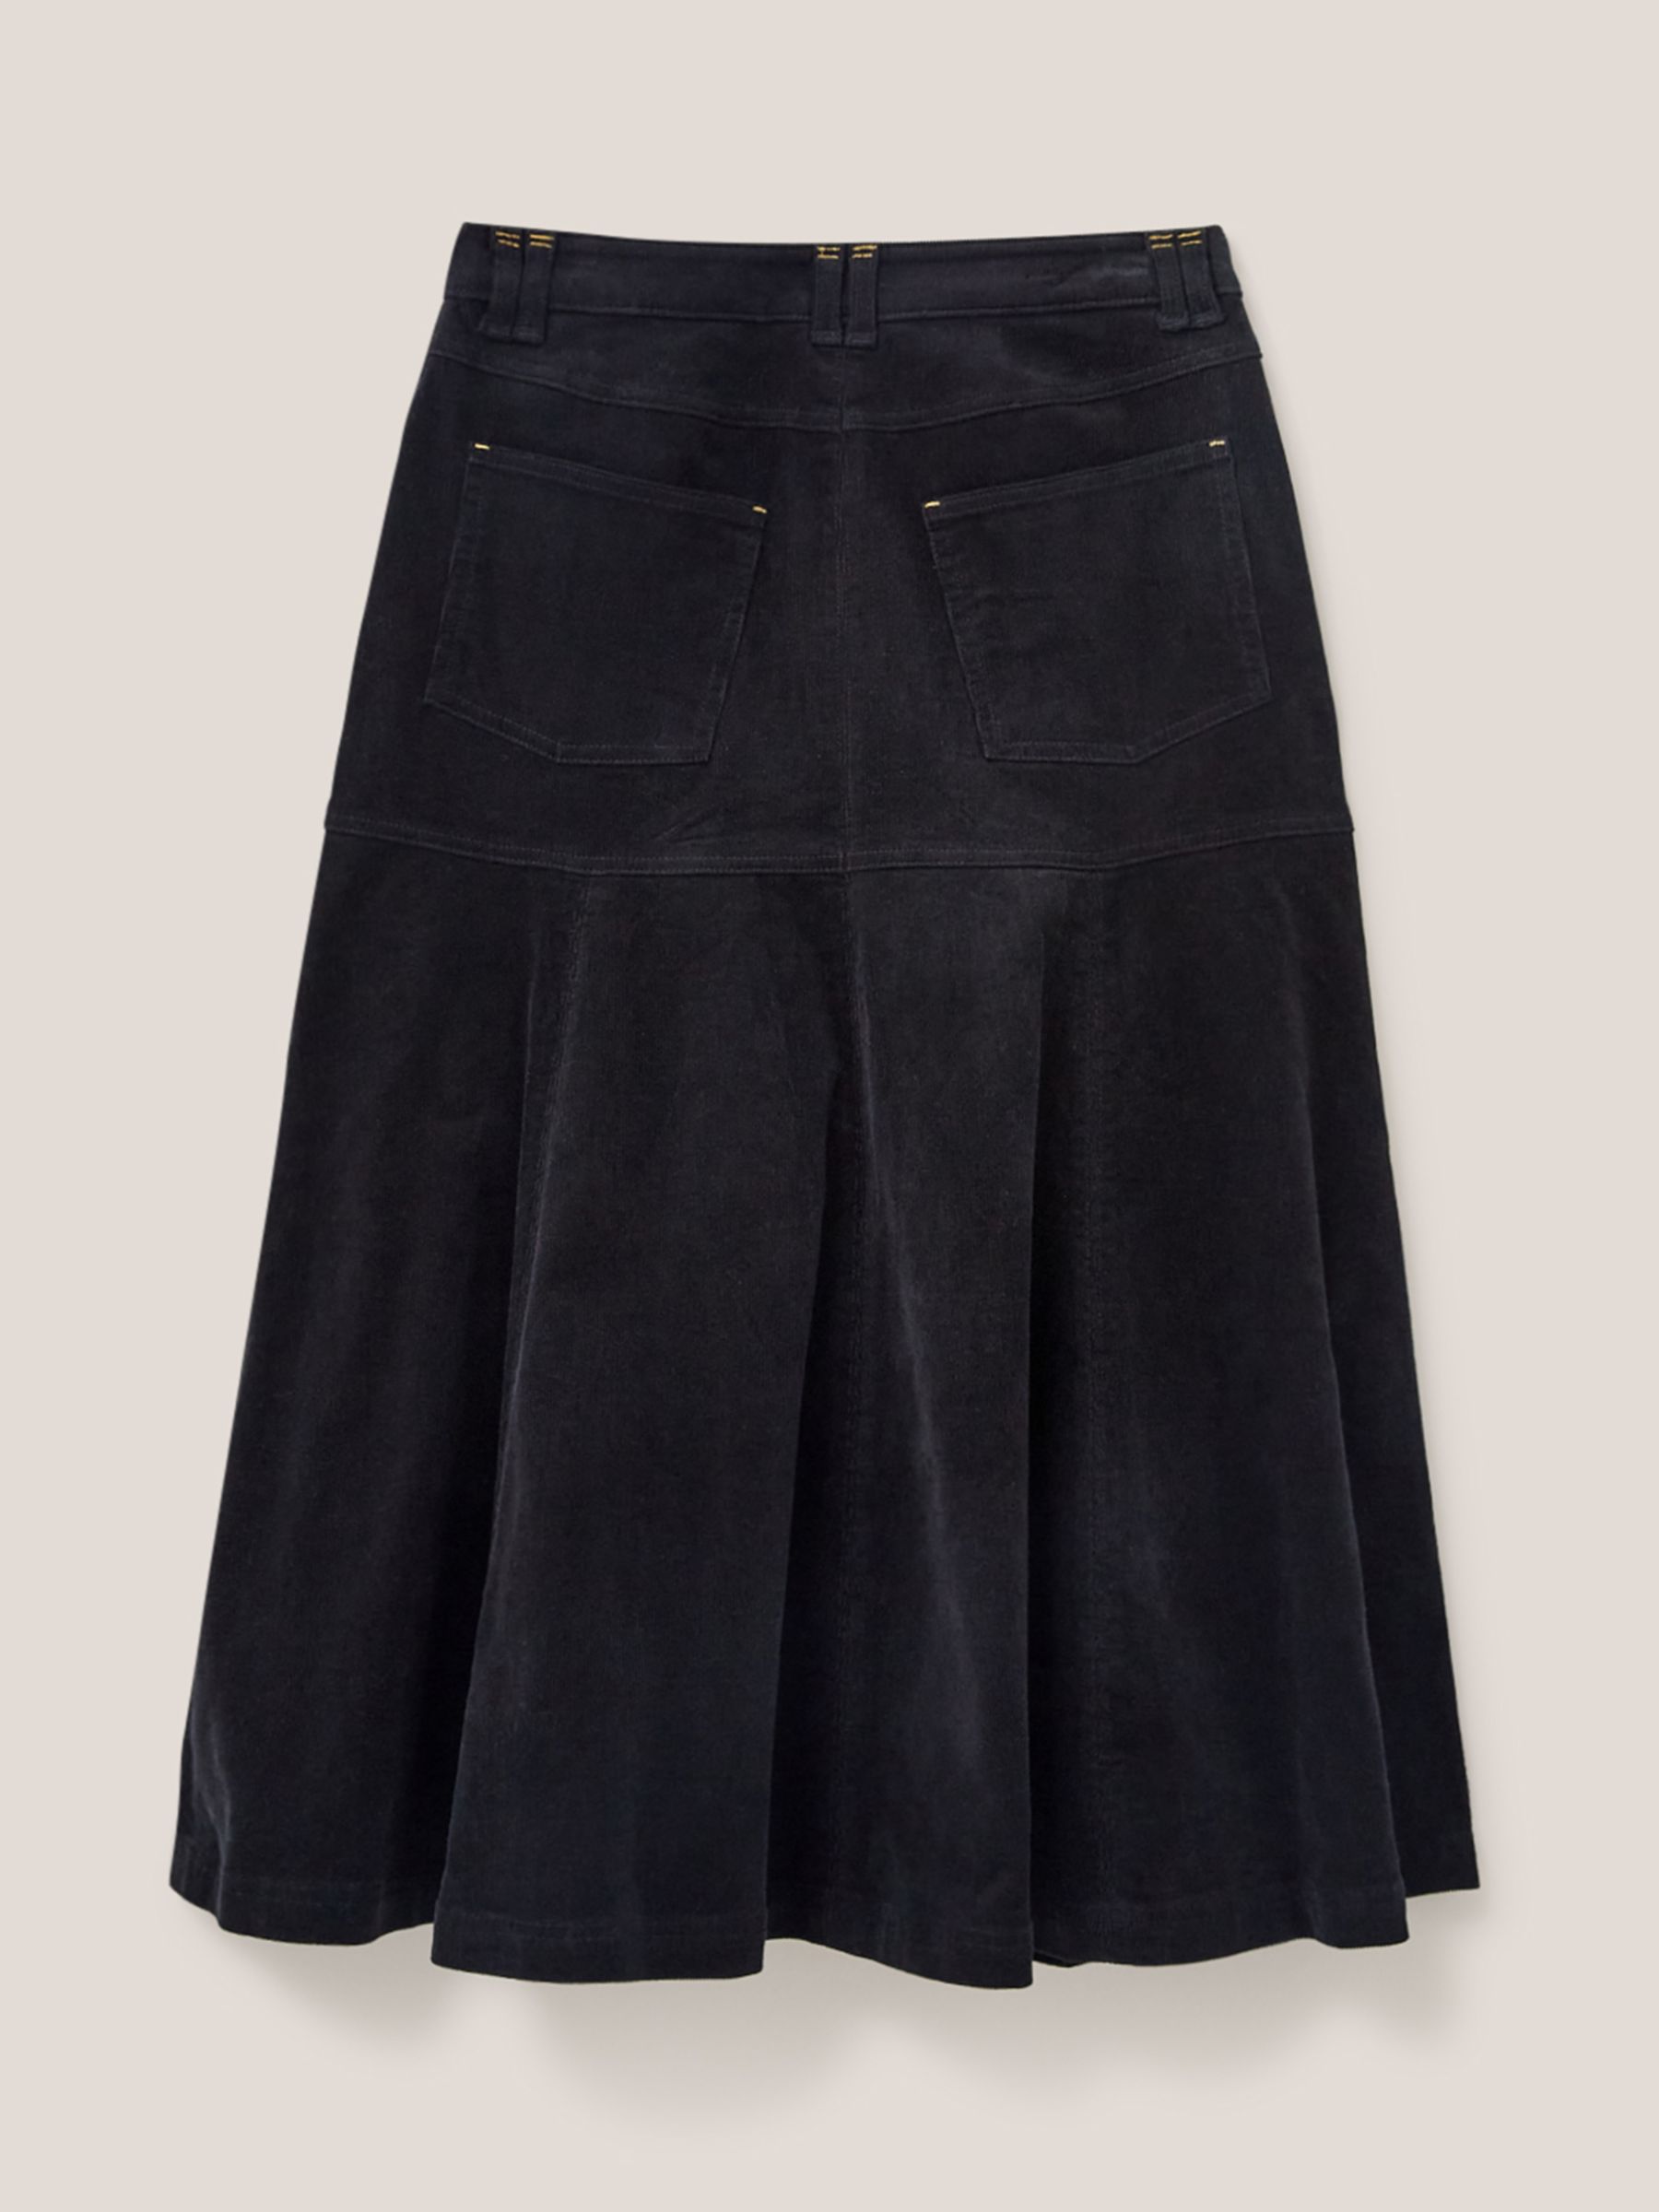 White Stuff Organic Cotton Blend Corduroy Skirt, Pure Black, 6